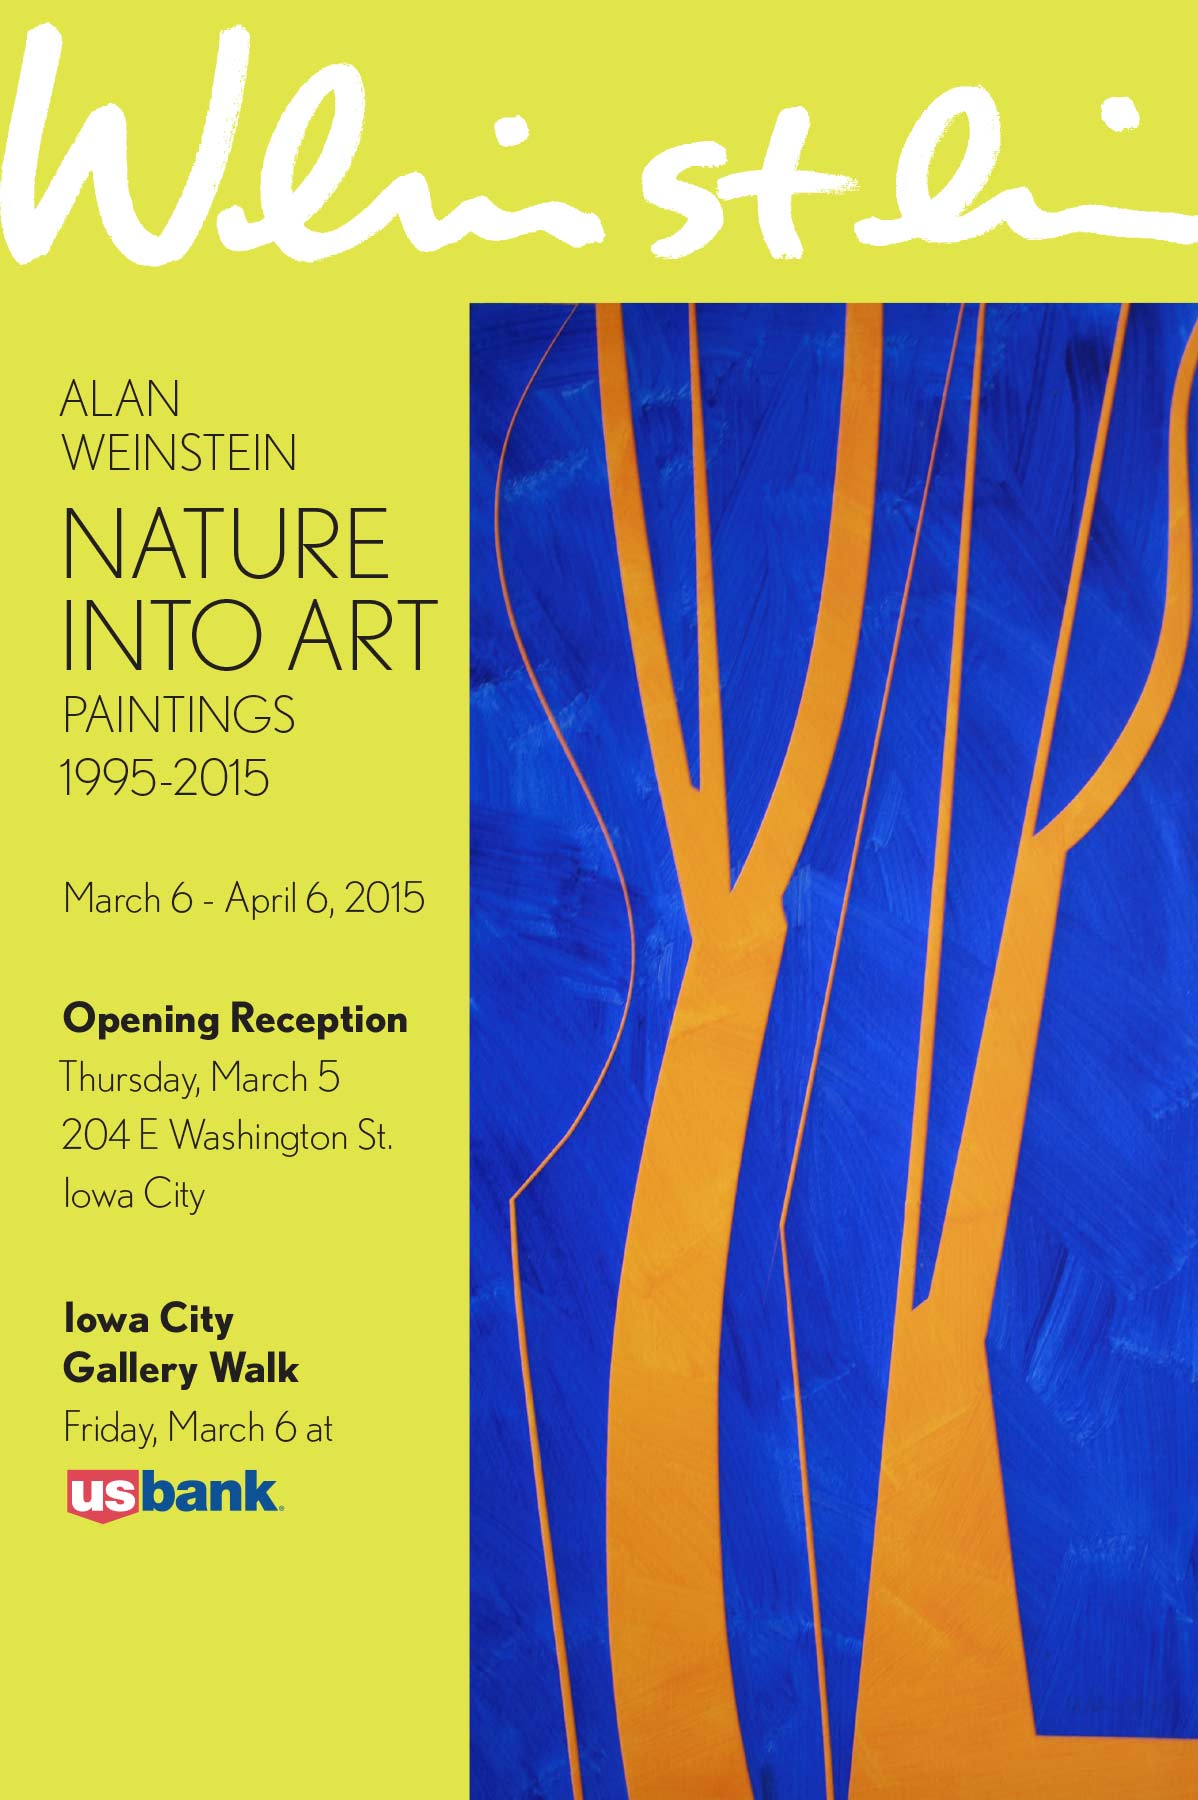 Alan-Weinstein-Recent-Exhibitions-nature-into-art-us-bank-2015